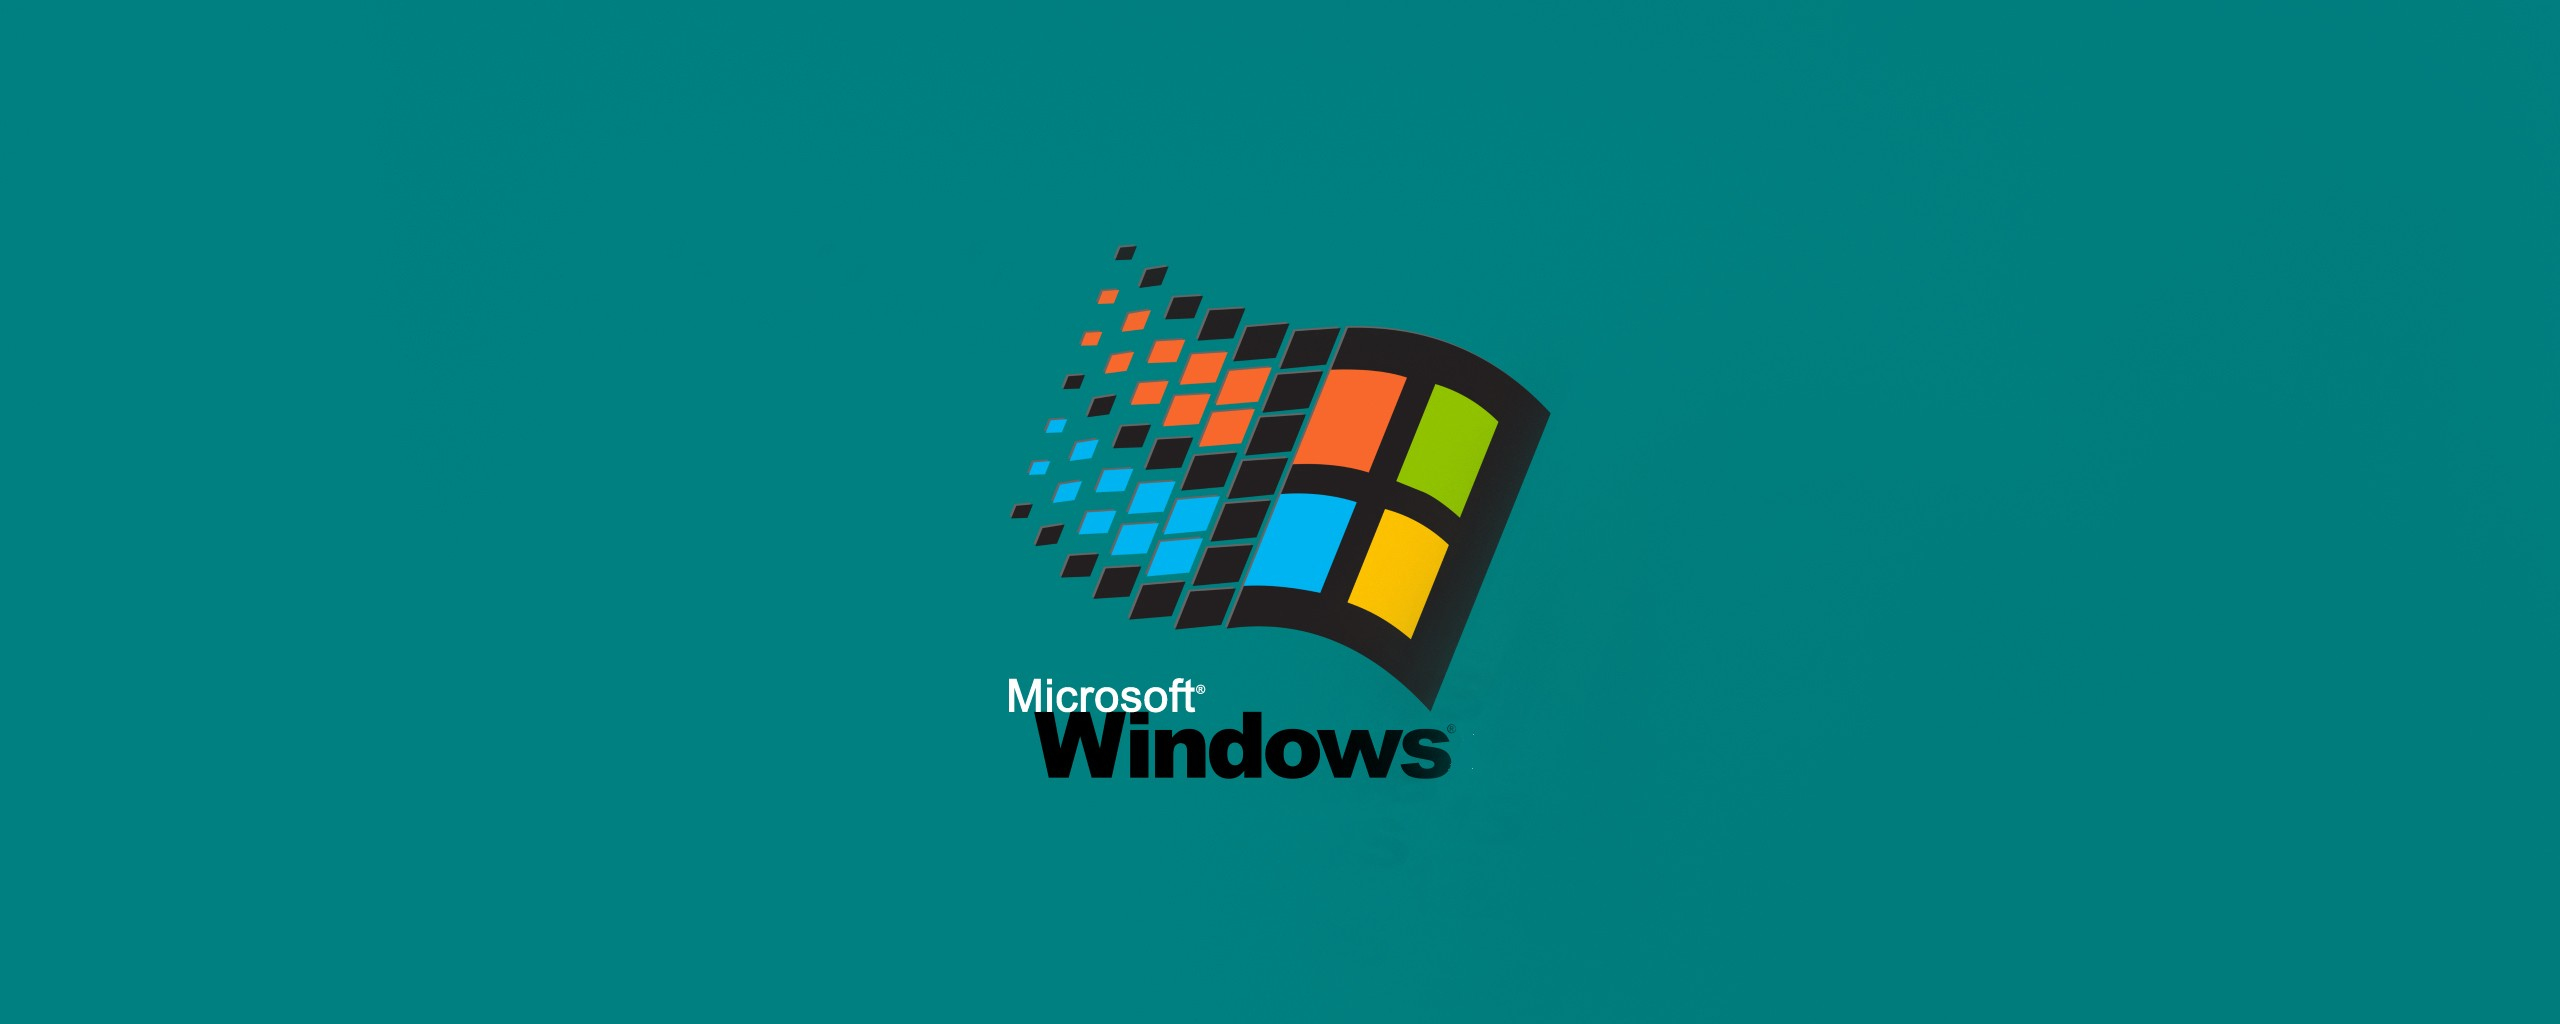 Desktop Wallpaper Microsoft Windows Logo Hd Image Picture Background Arfmis